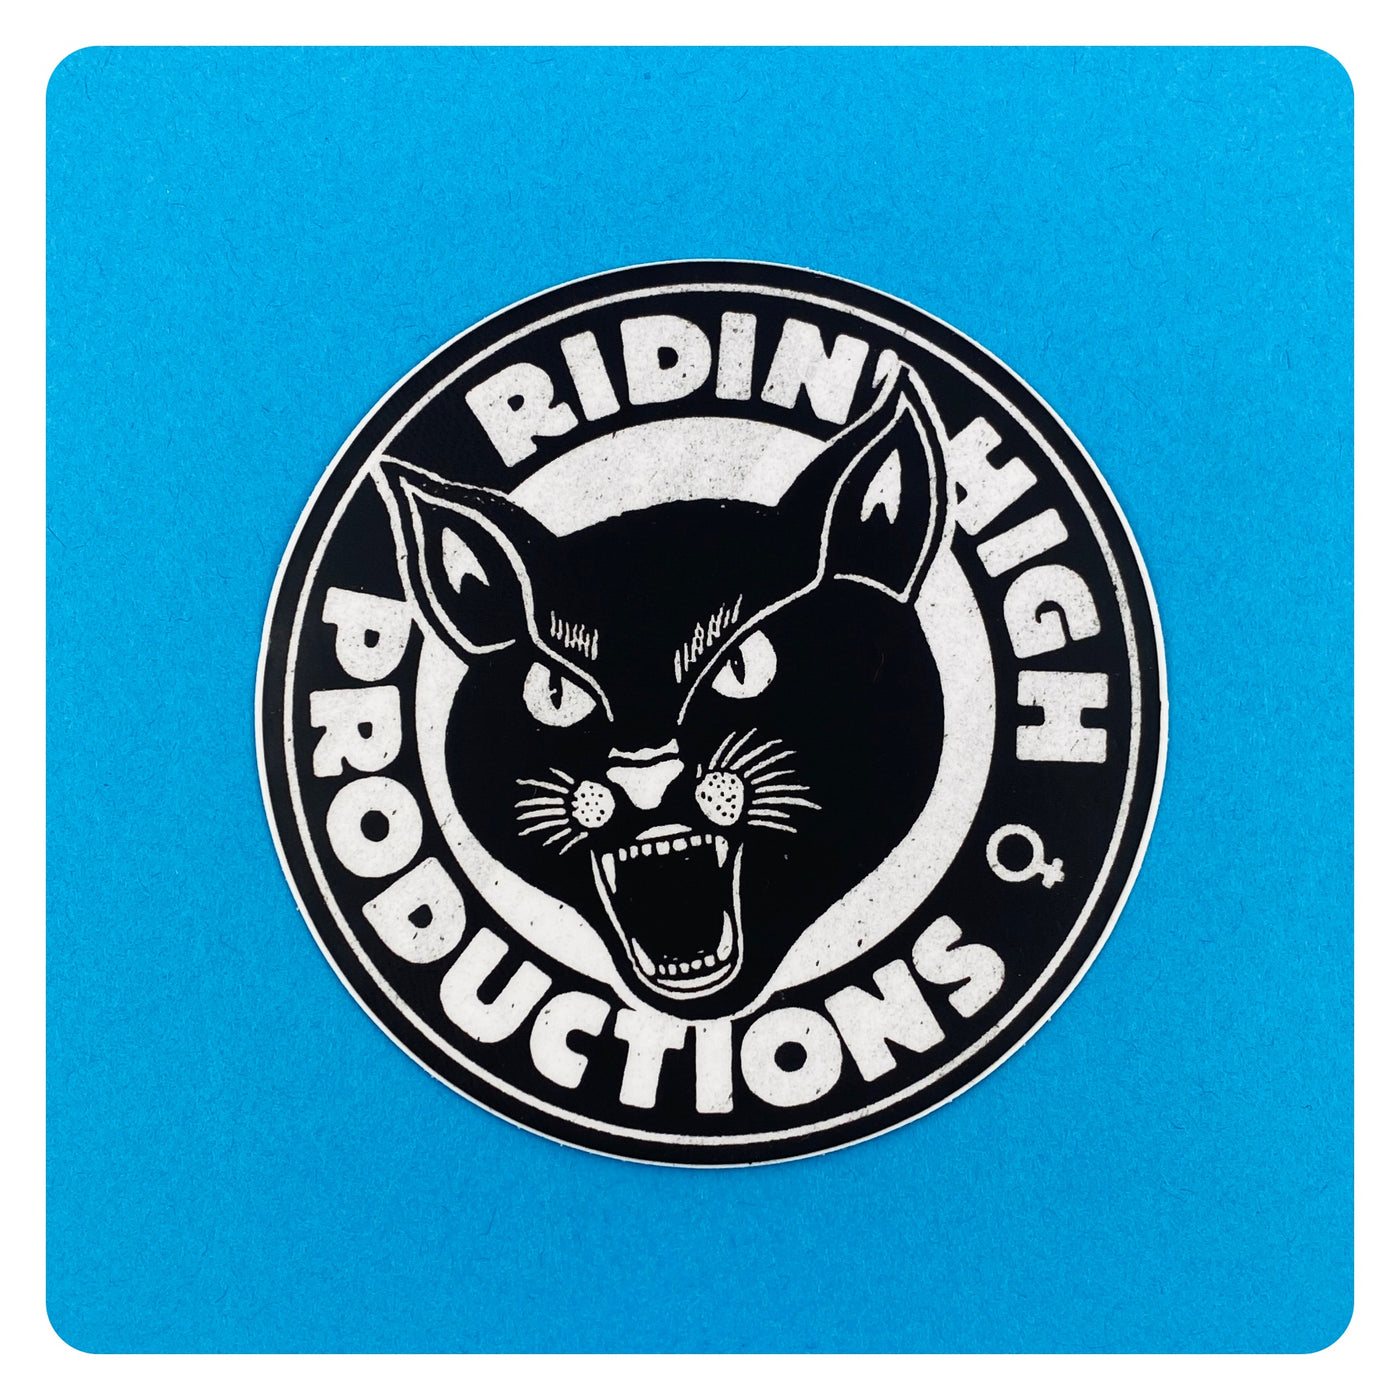 Ridin' High Productions Brand Sticker